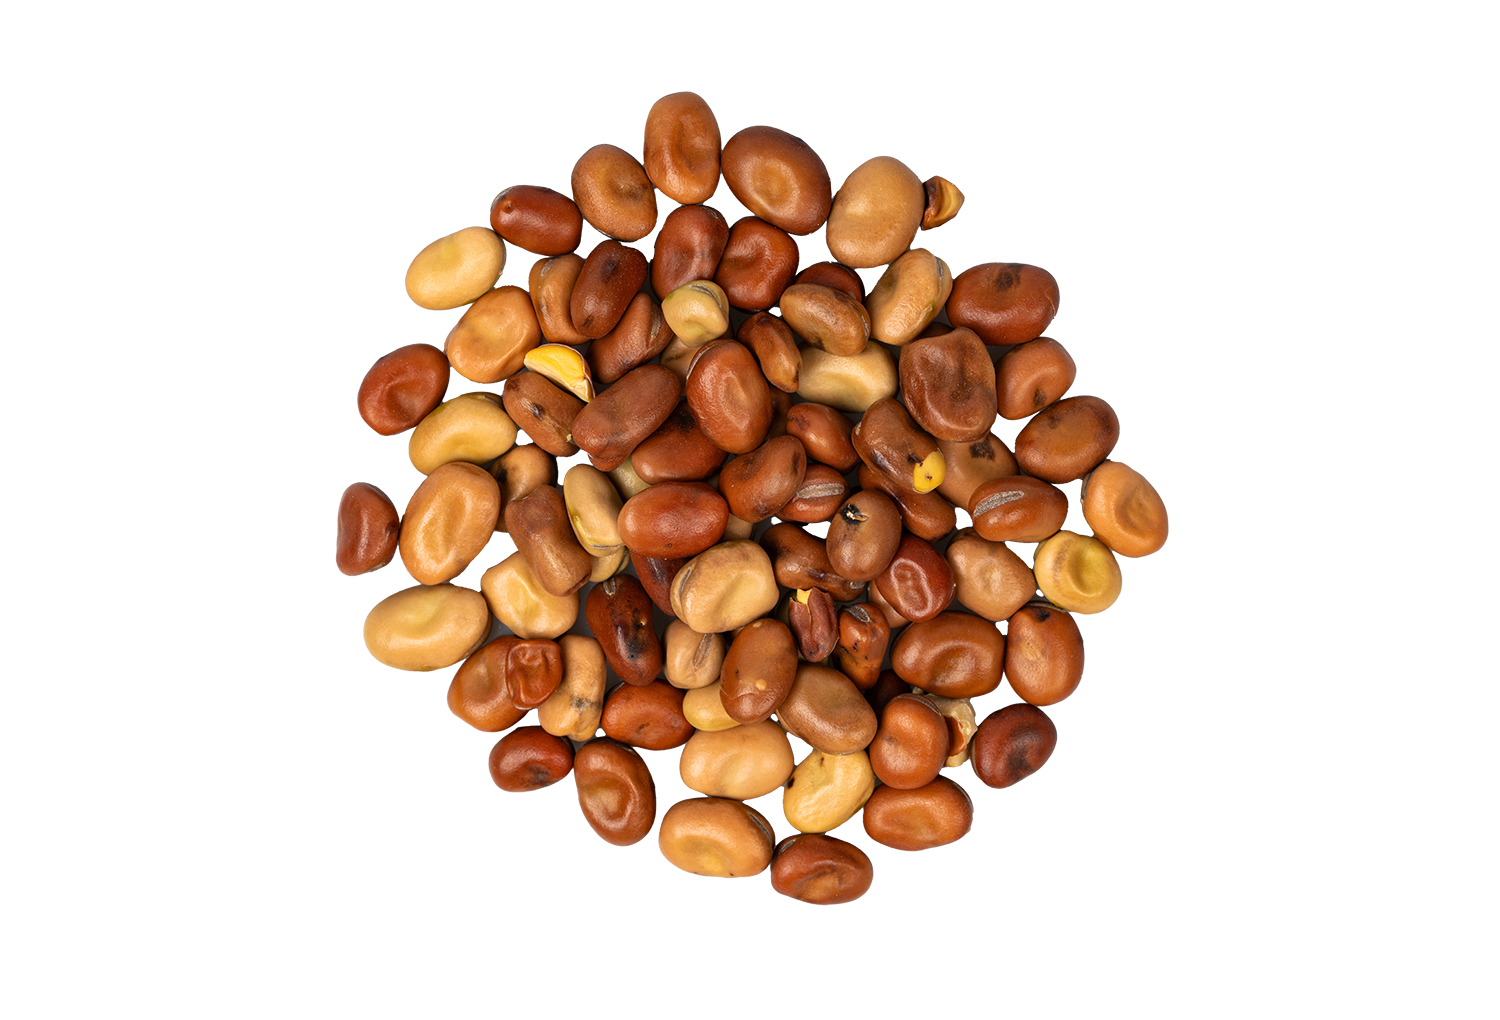 Faba beans